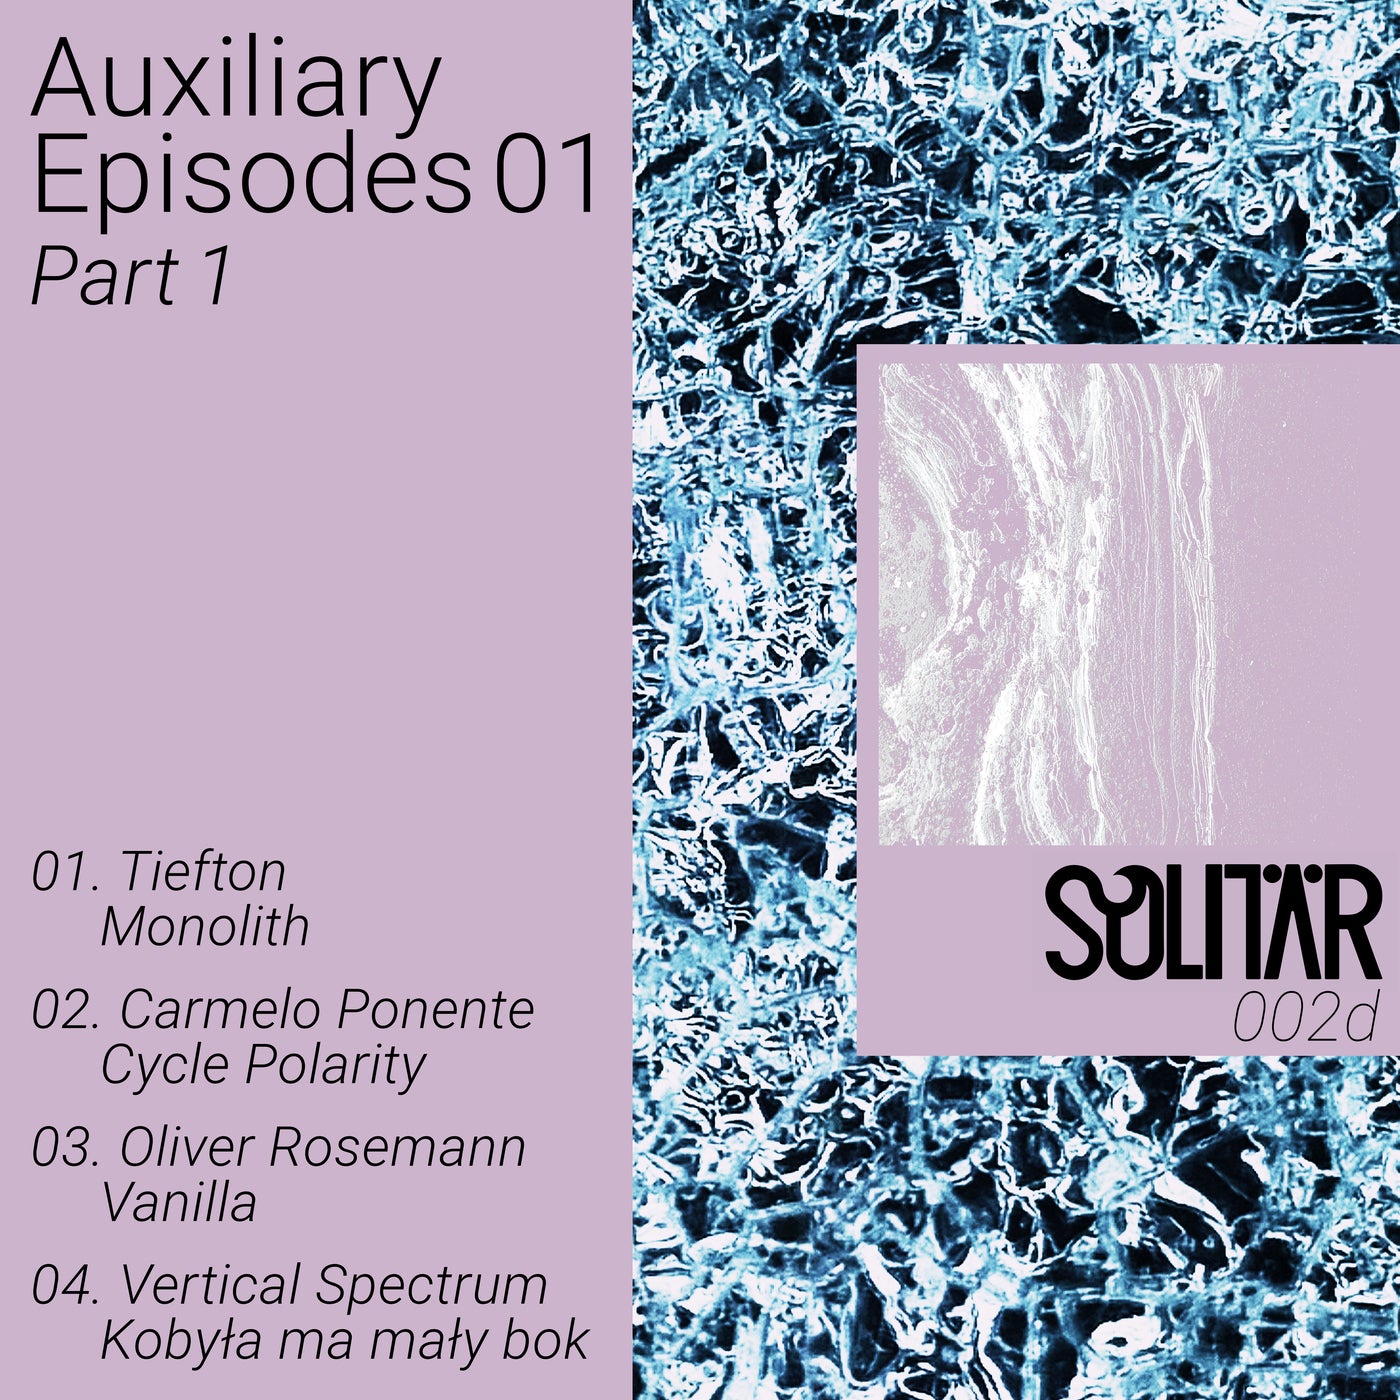 Auxiliary Episodes 01 Part 1